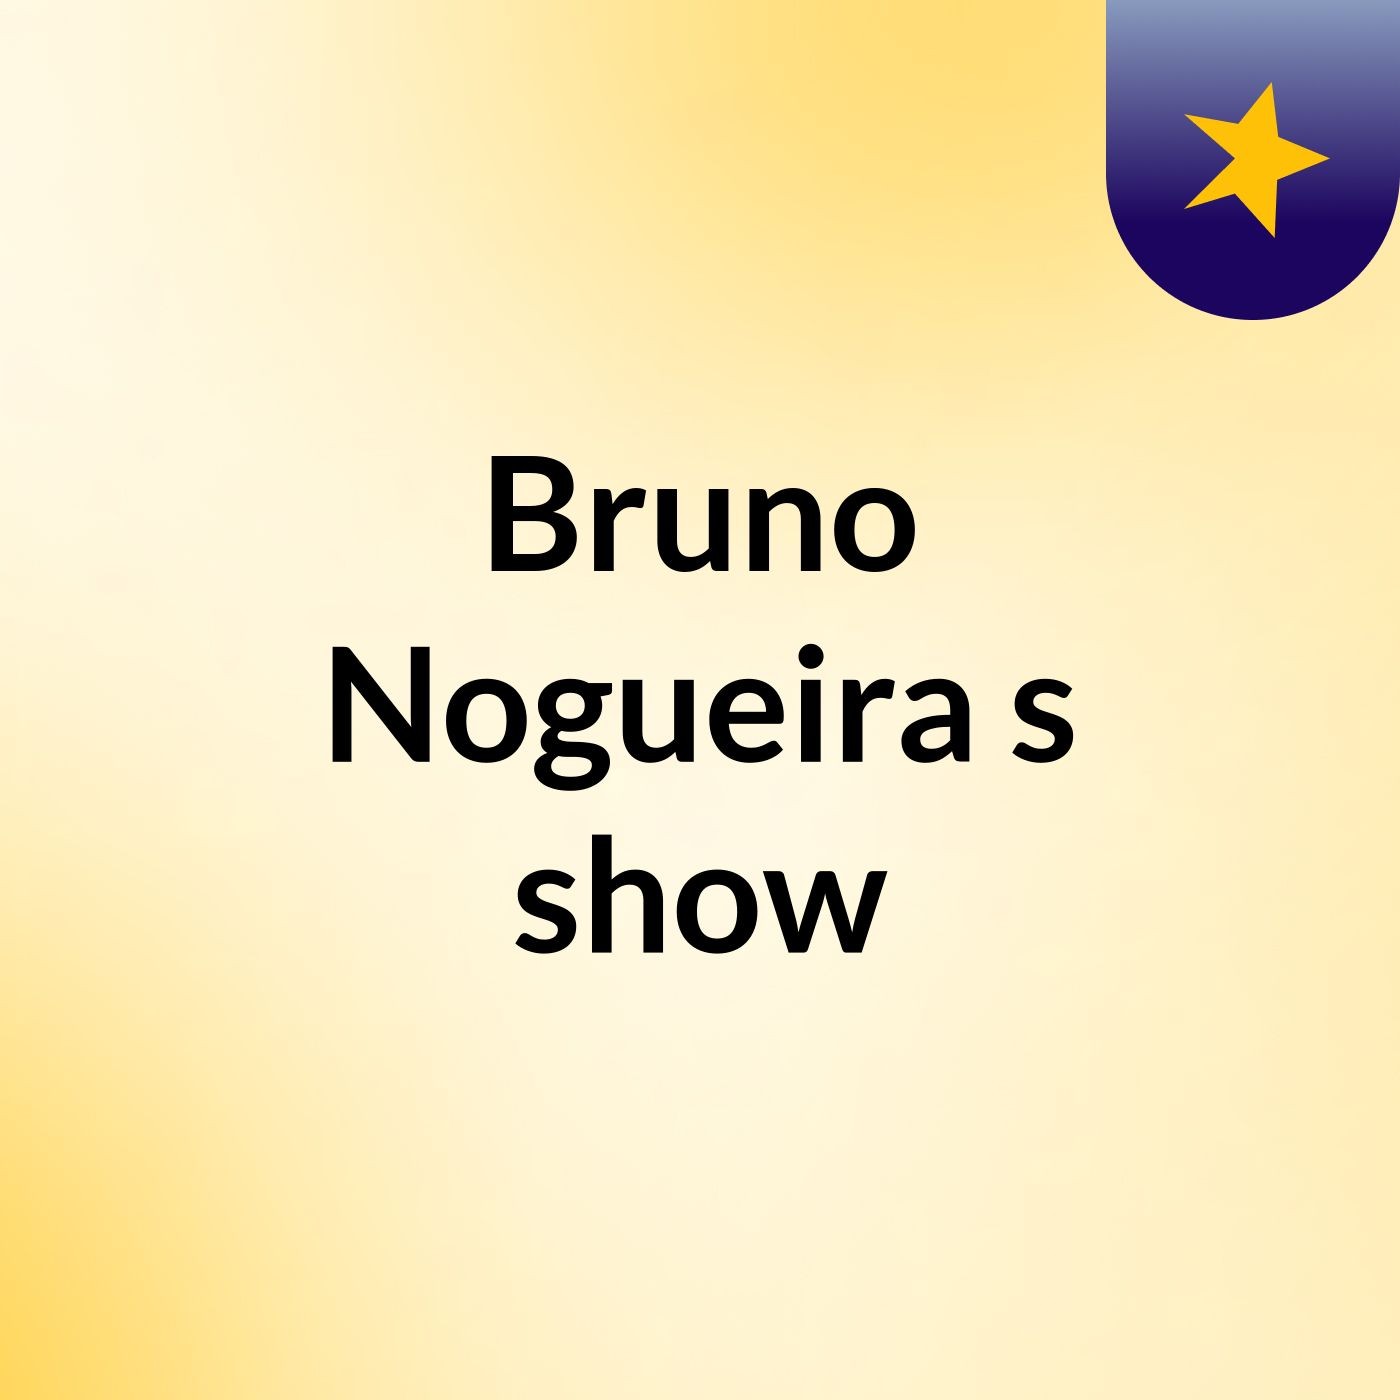 Bruno Nogueira's show